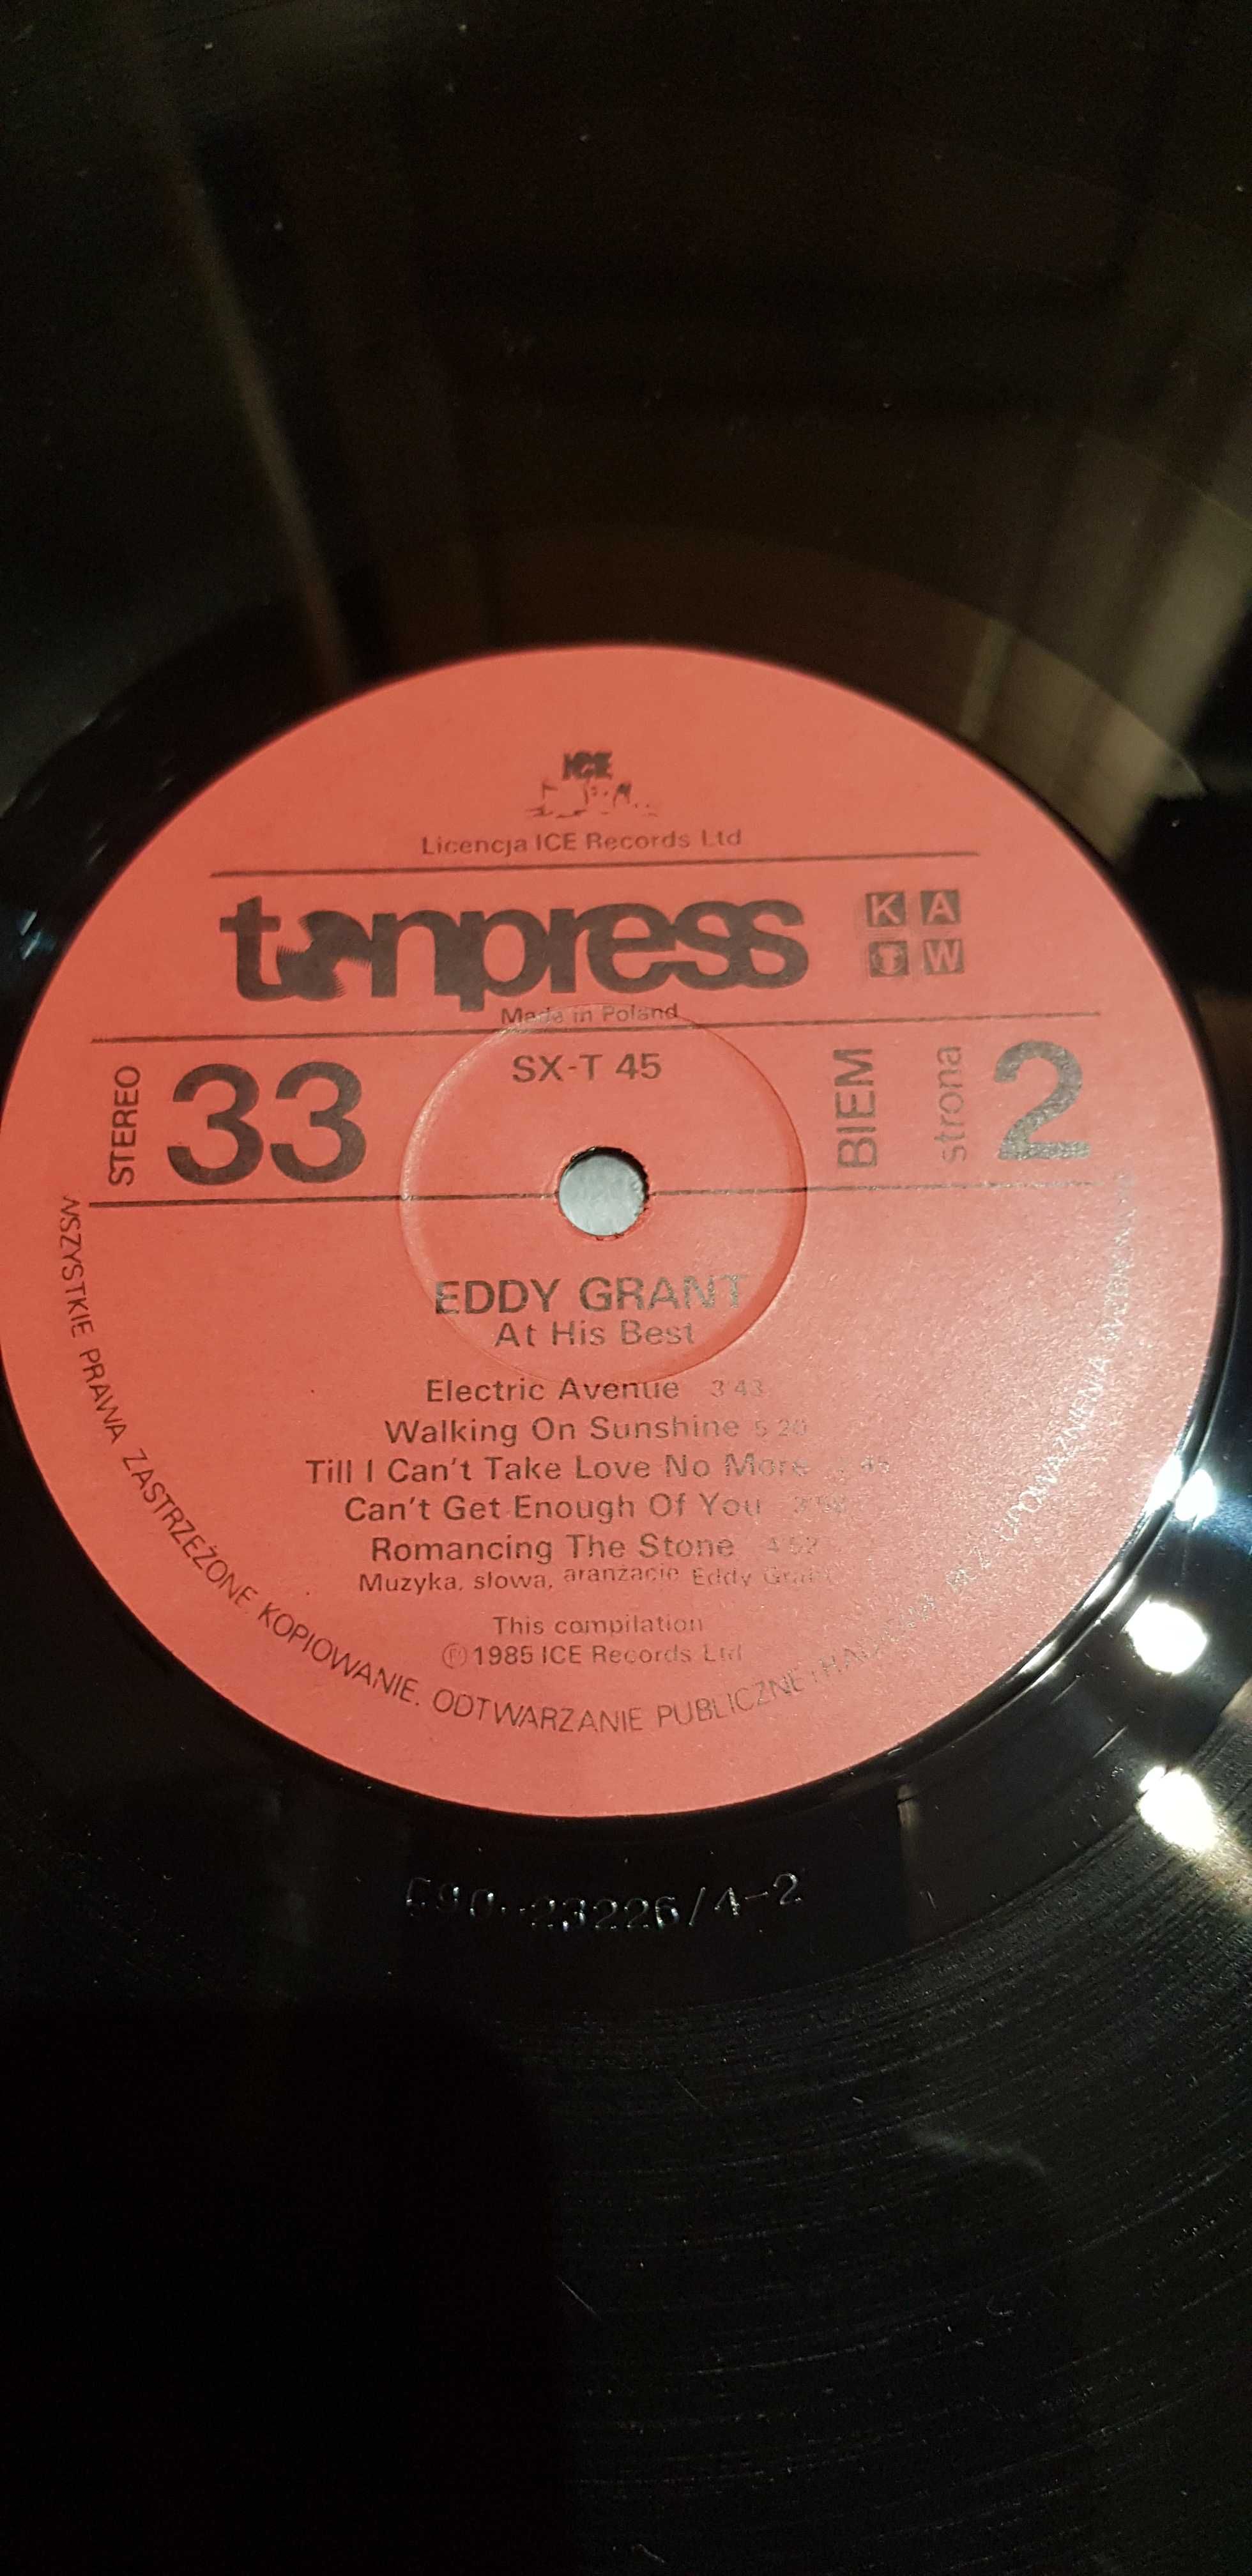 Płyta winylowa, Eddy Grant, At his best